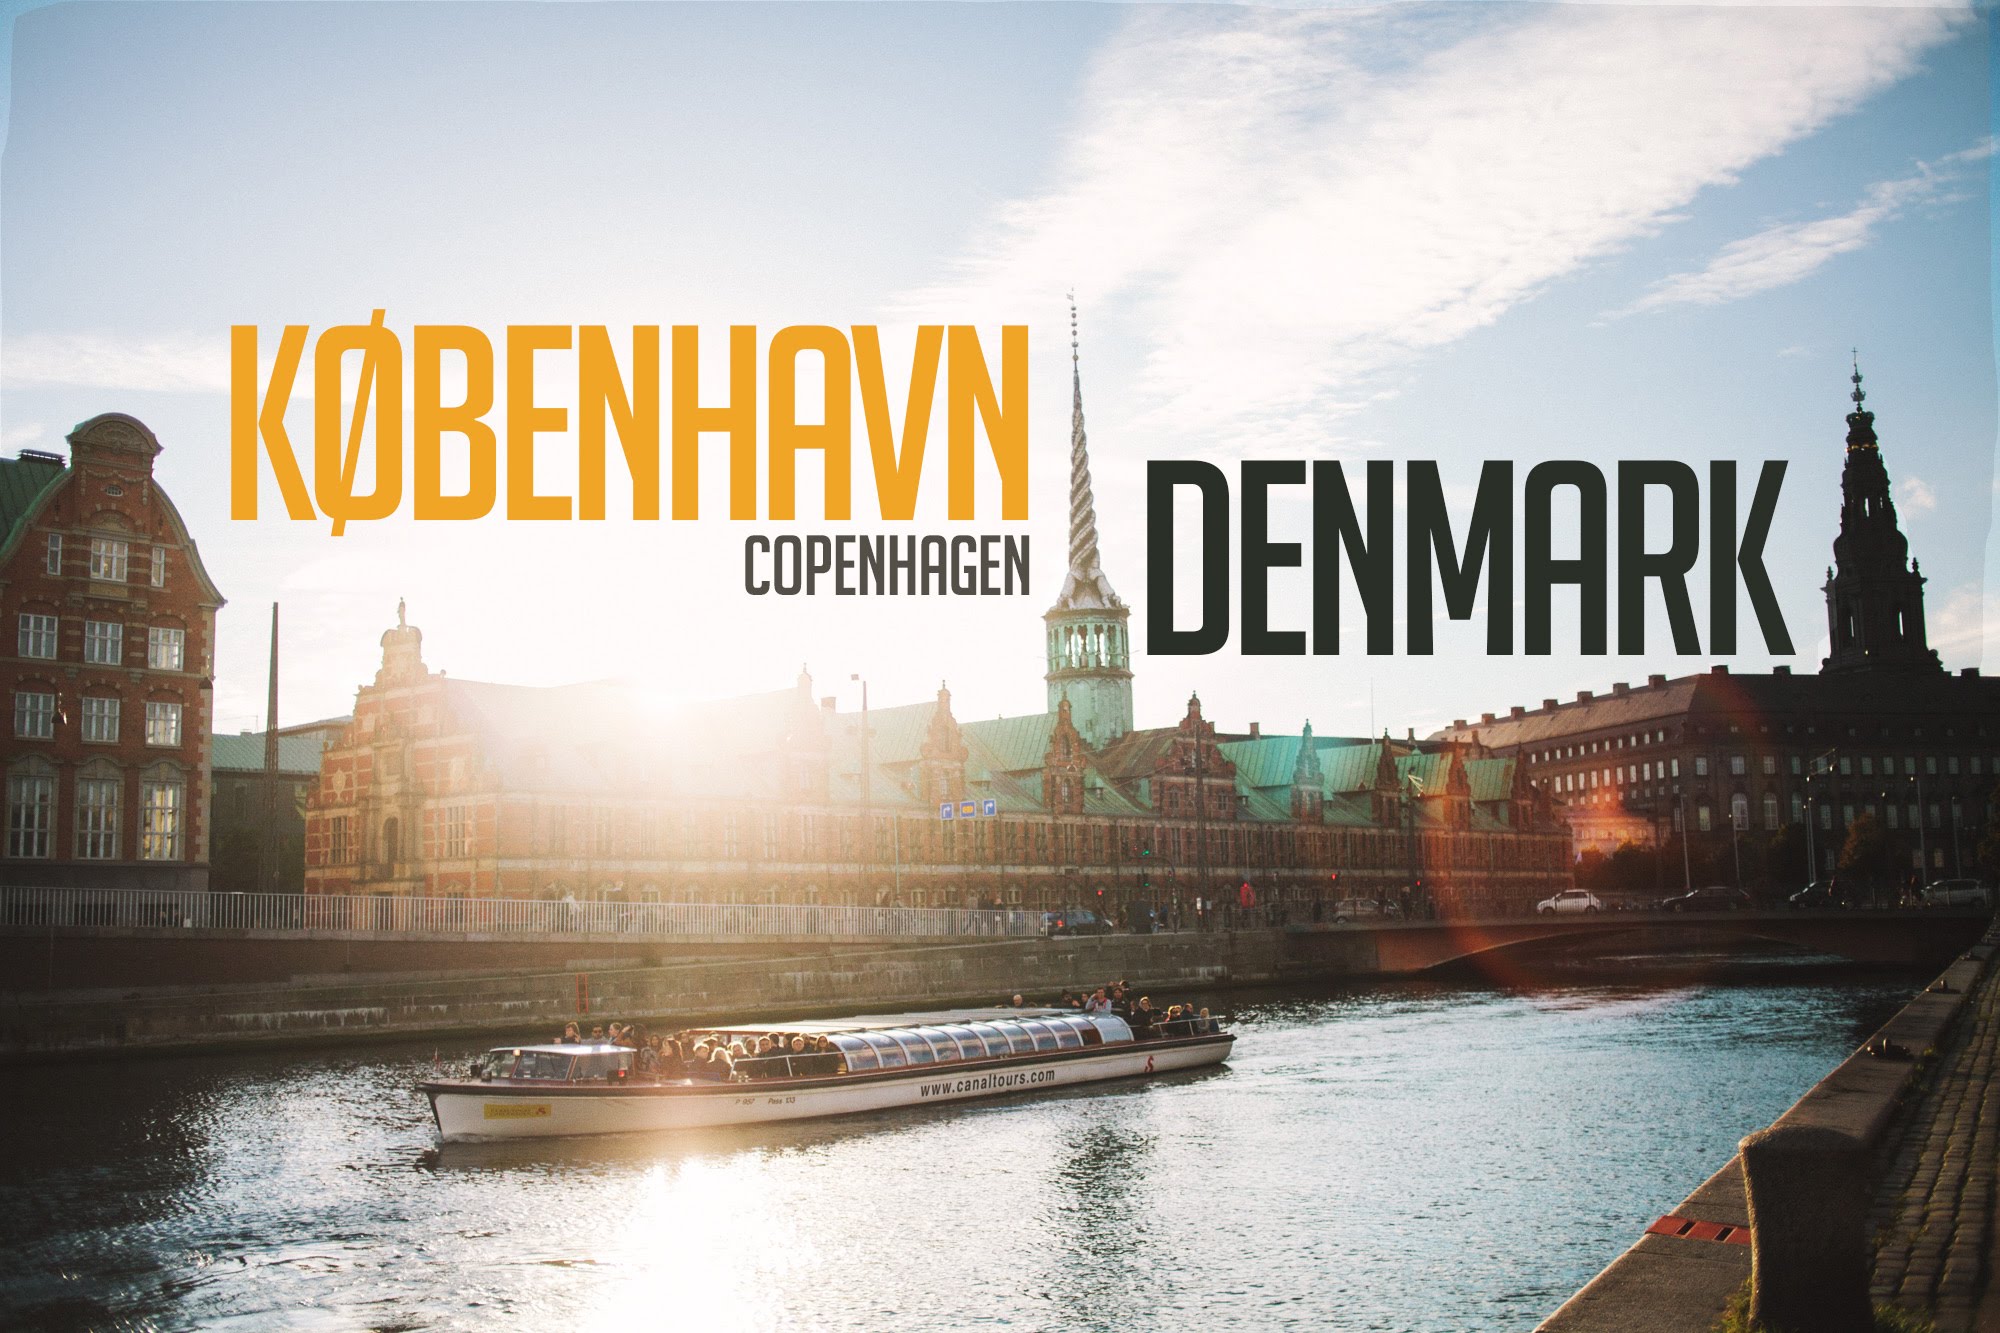 Photo of Copenhagen city in Denmark